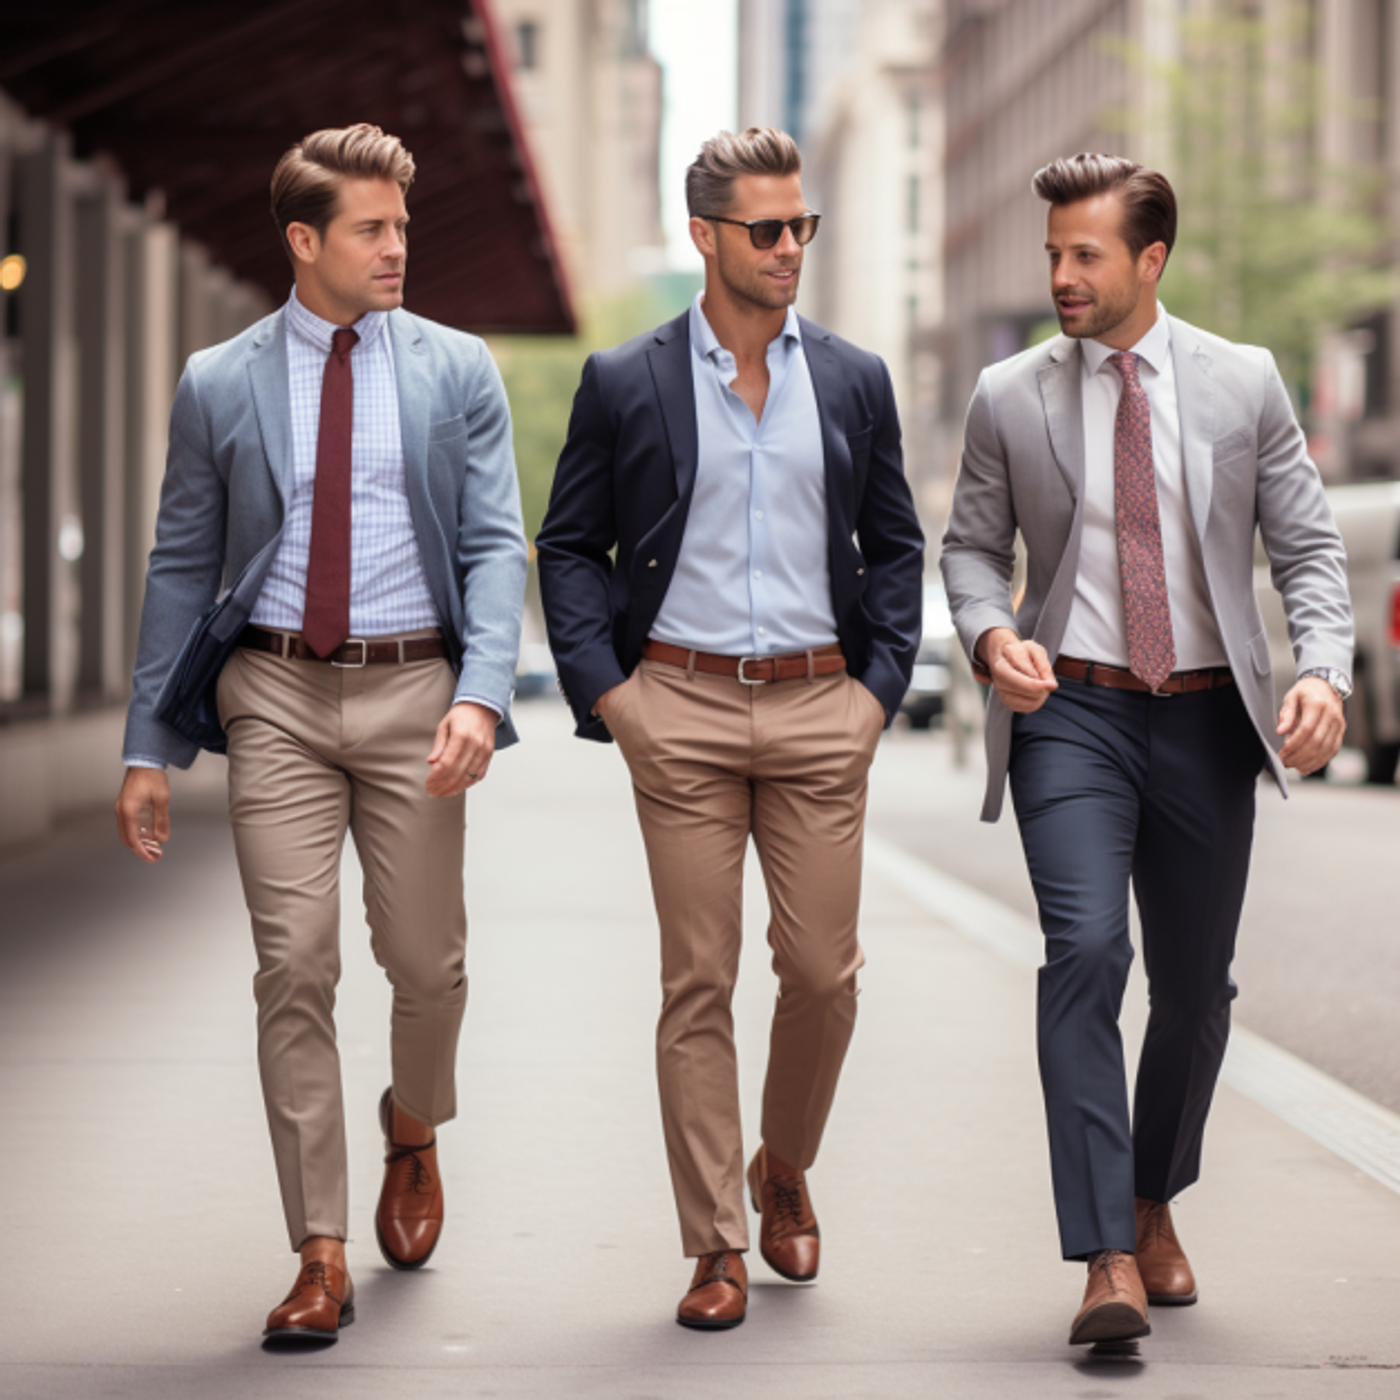 men’s business dress attire